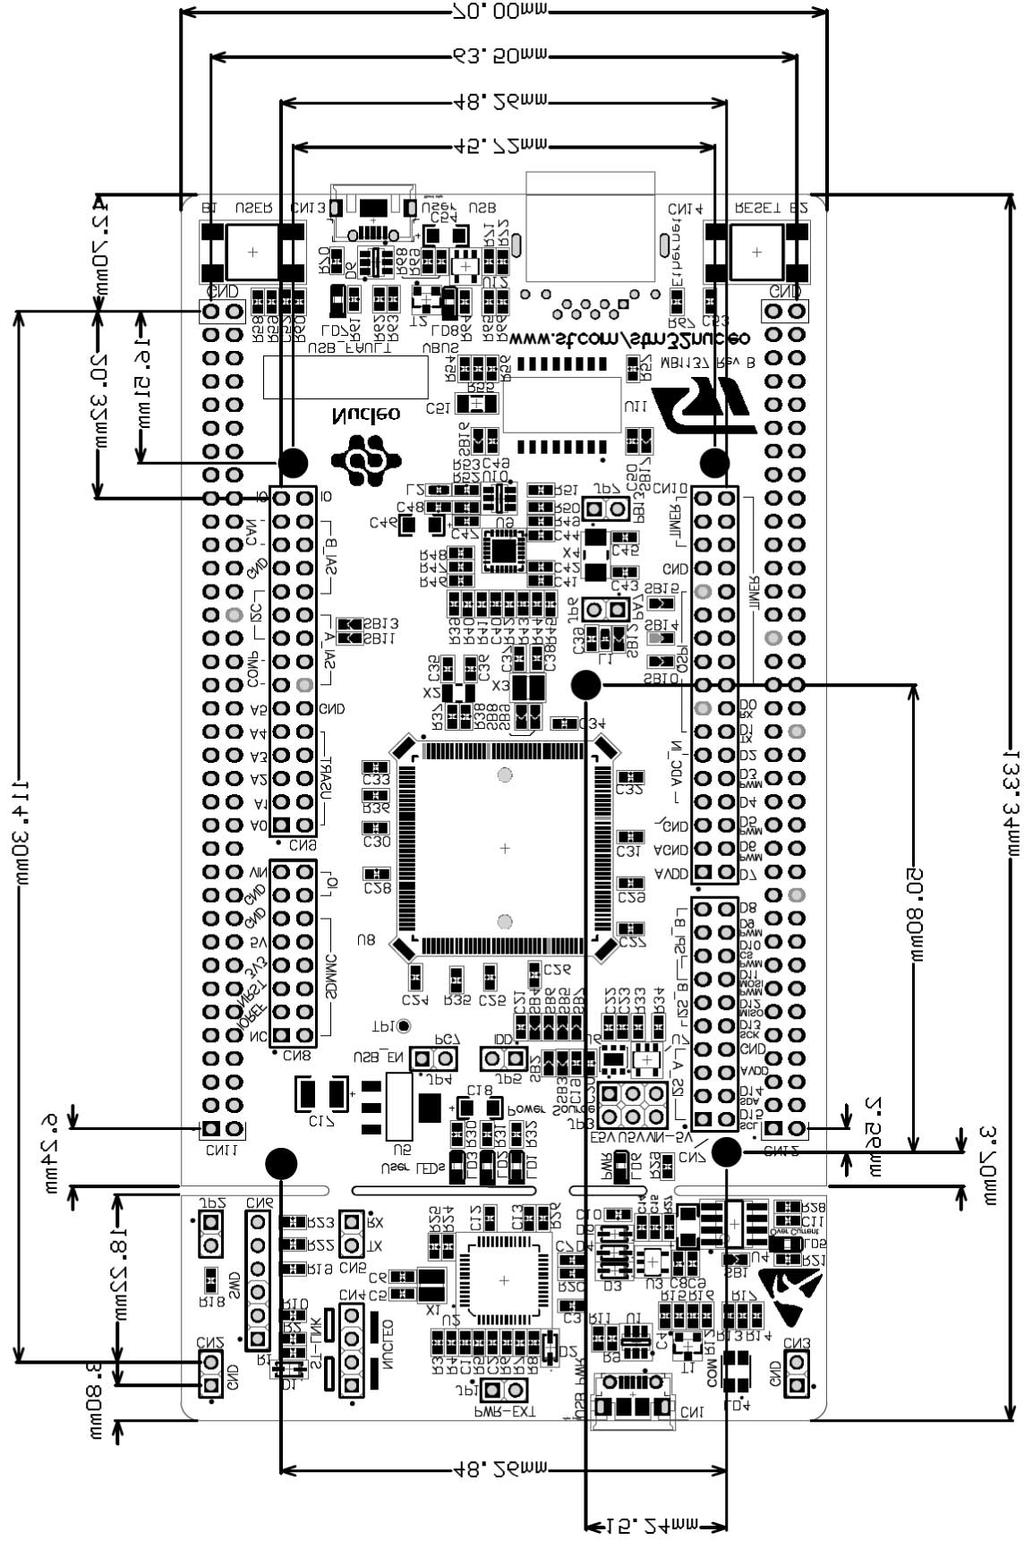 Hardware layout and configuration UM1974 6.1 Mechanical drawing Figure 6.